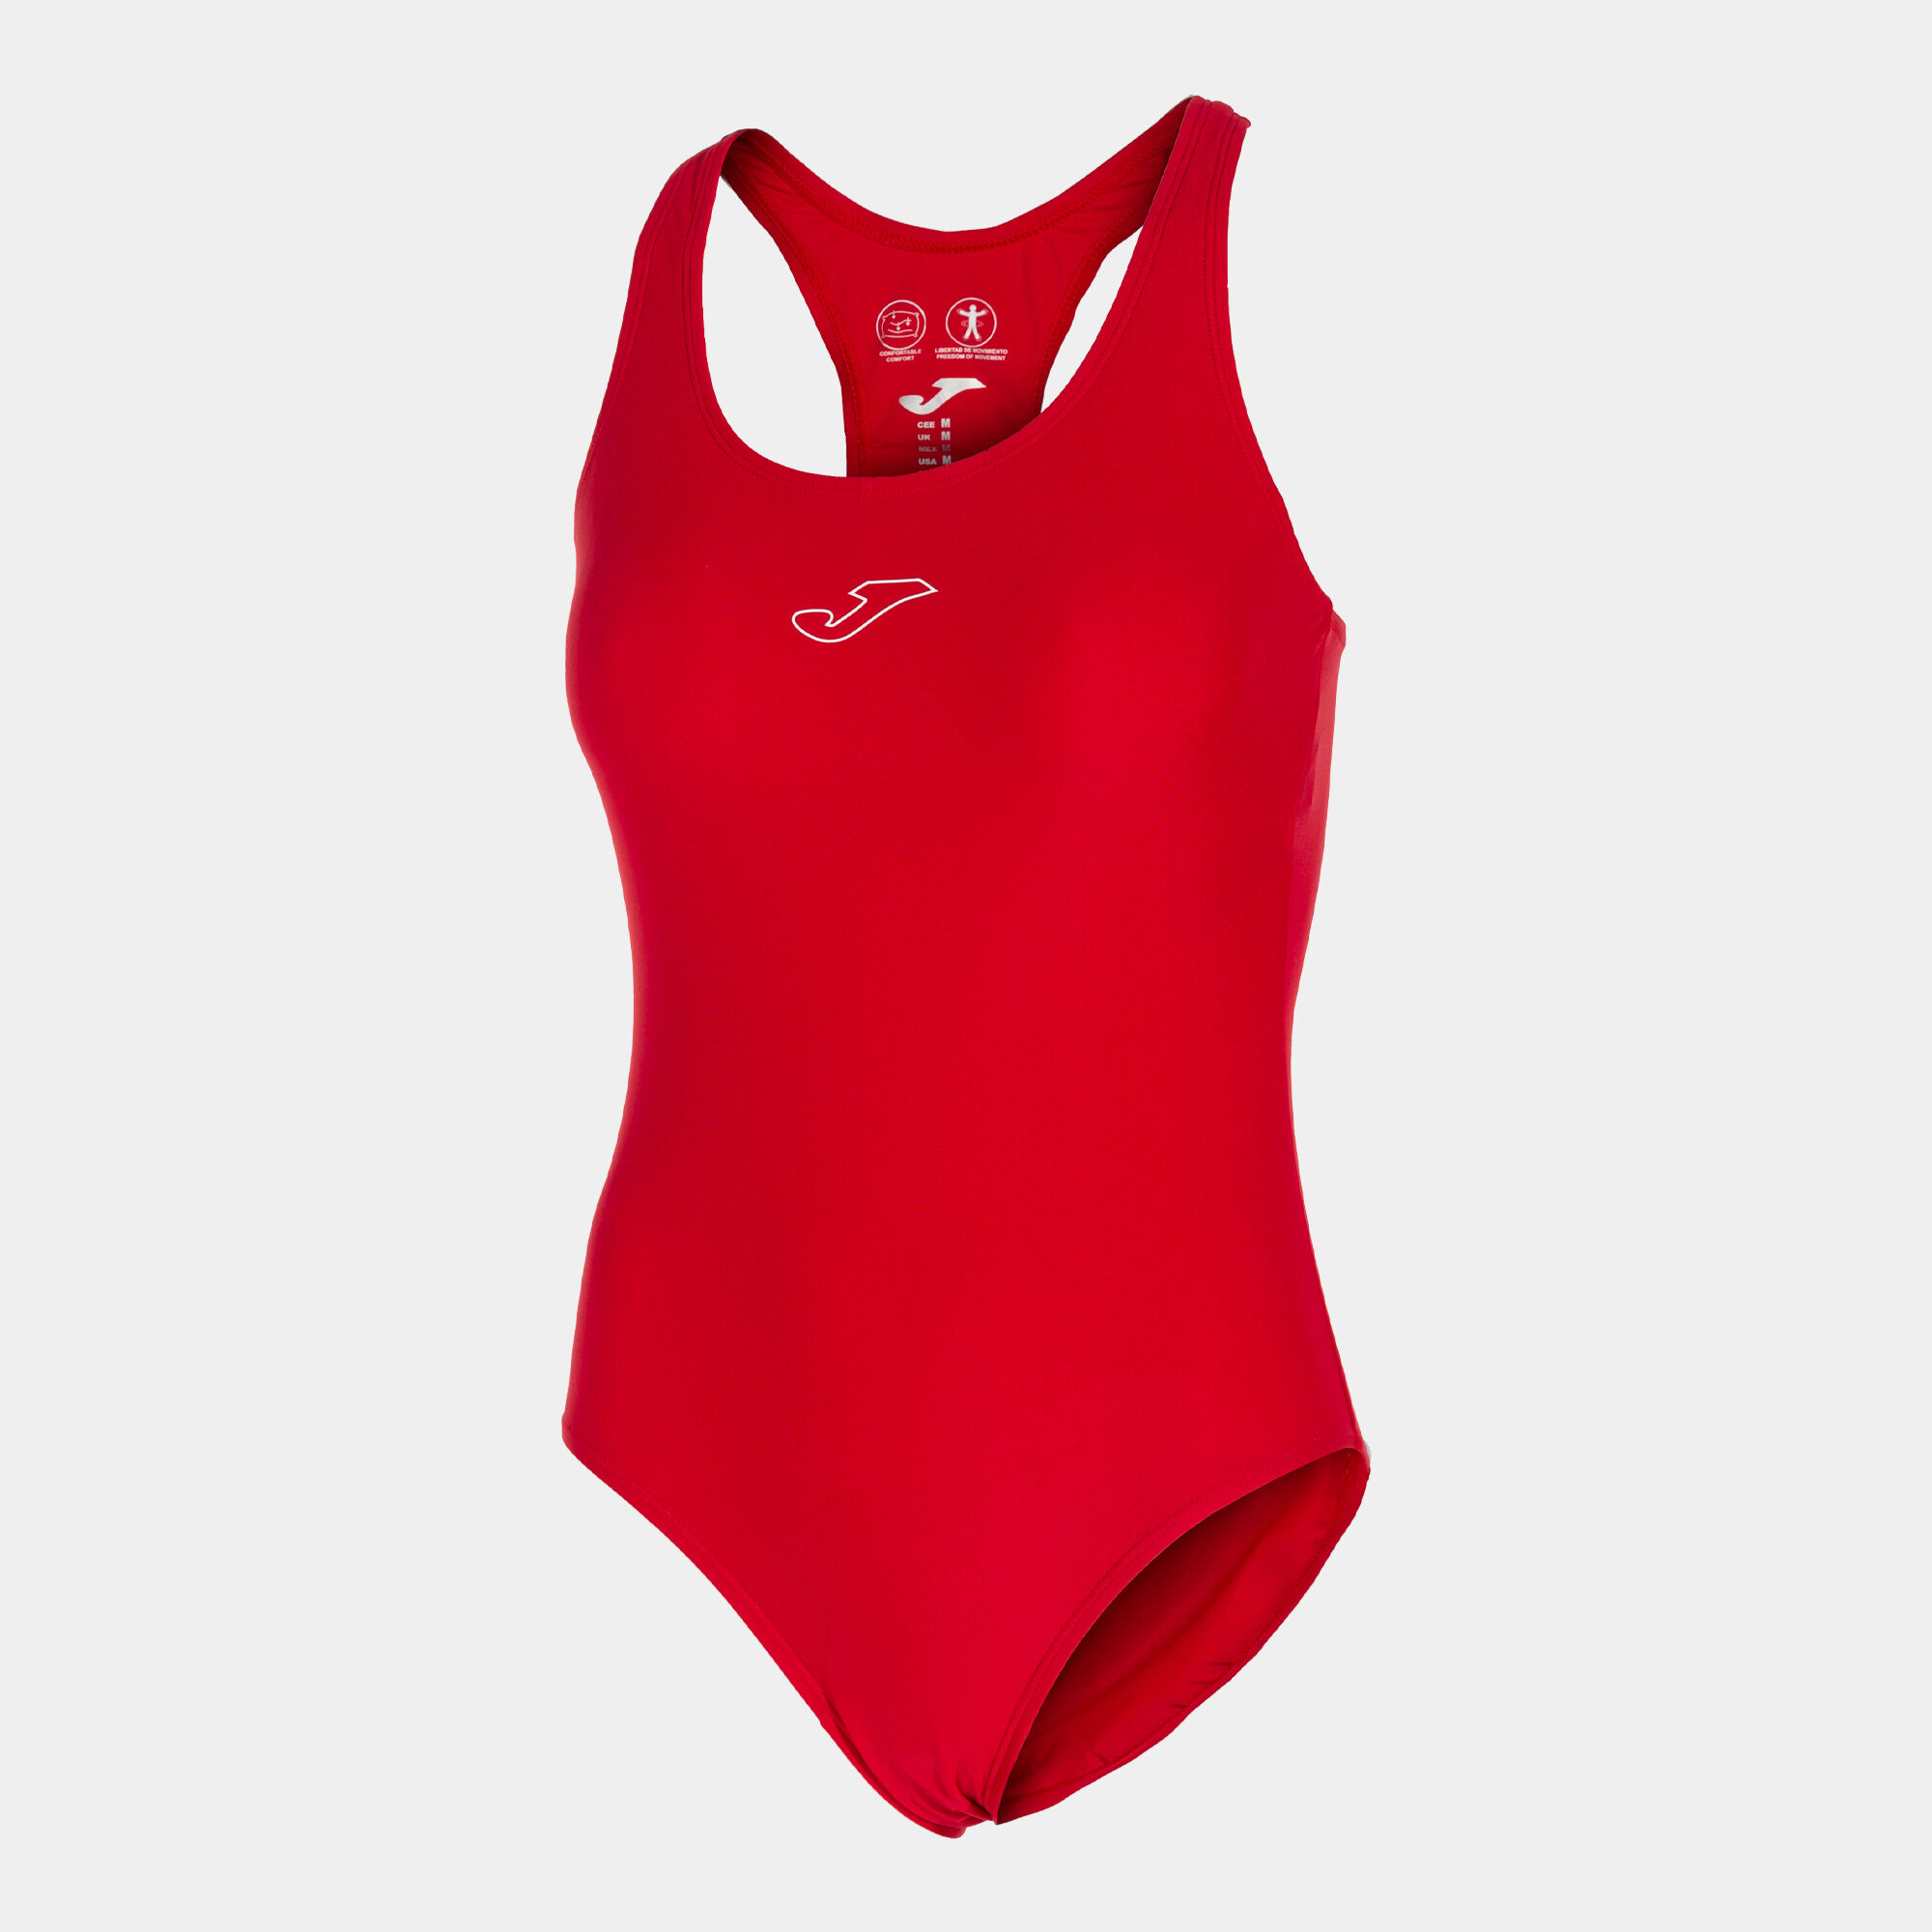 Swimsuit woman Splash red